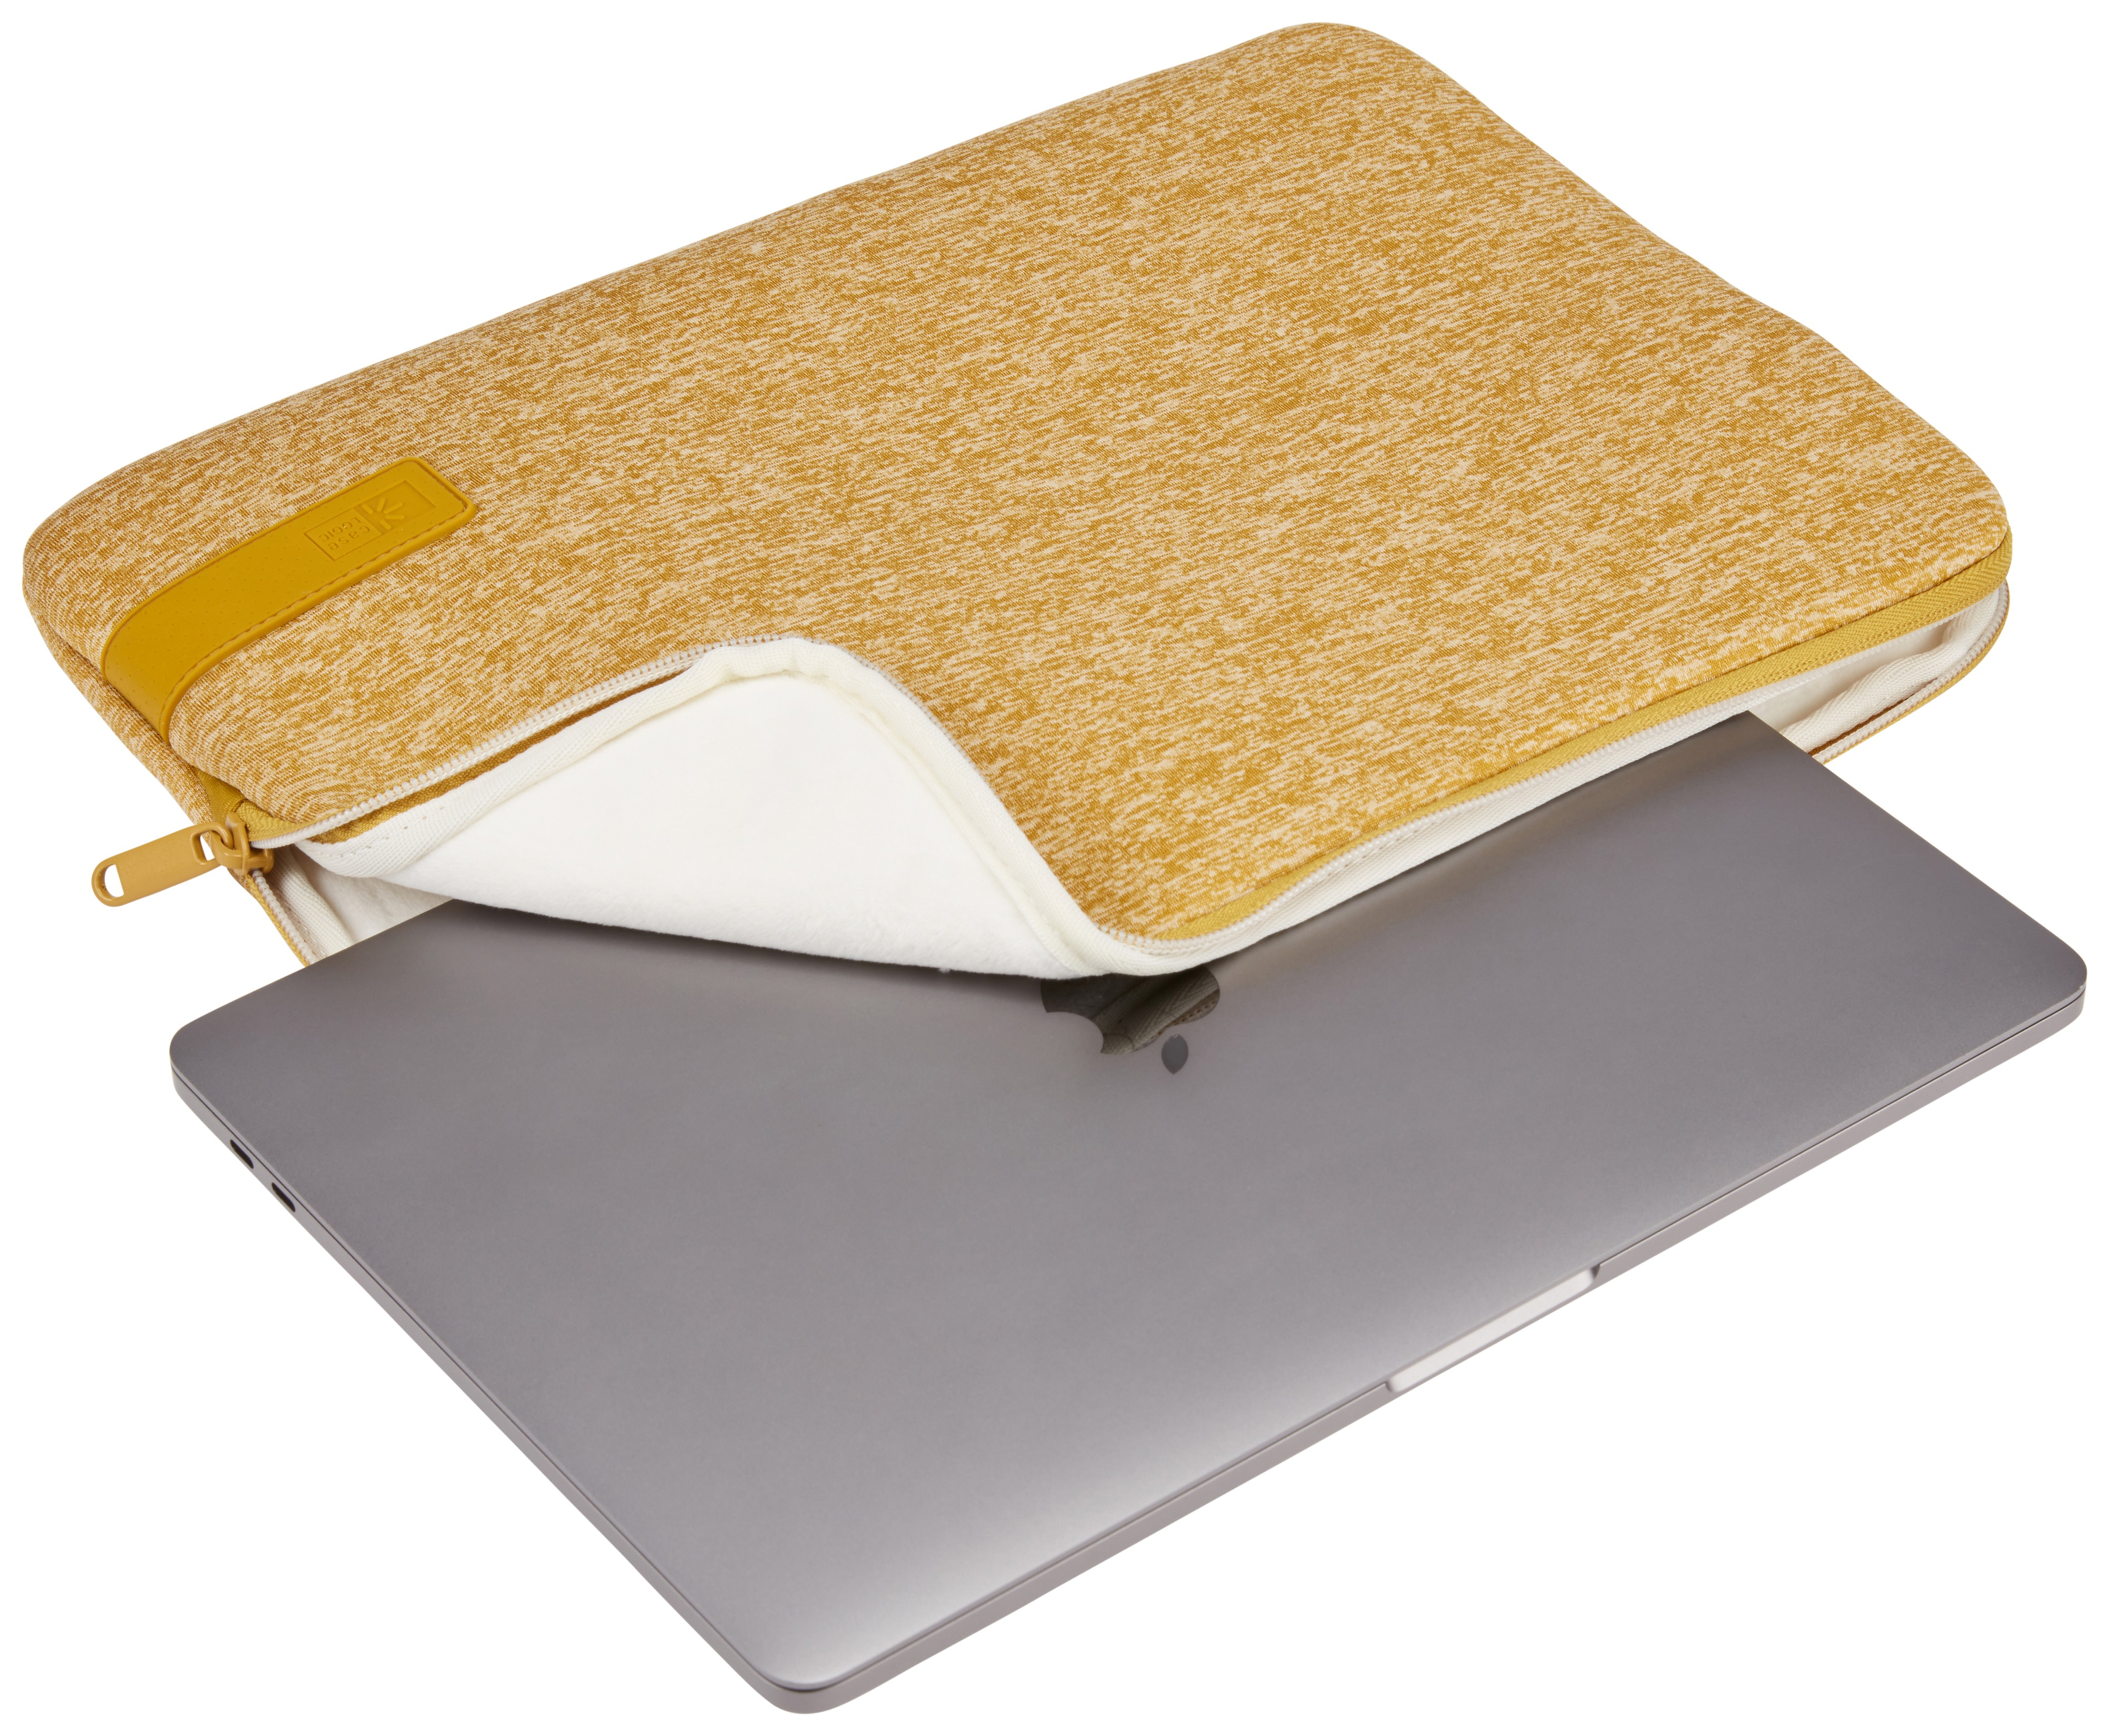 CASE LOGIC Reflect Notebooksleeve Sleeve Polyester, Court für Apple